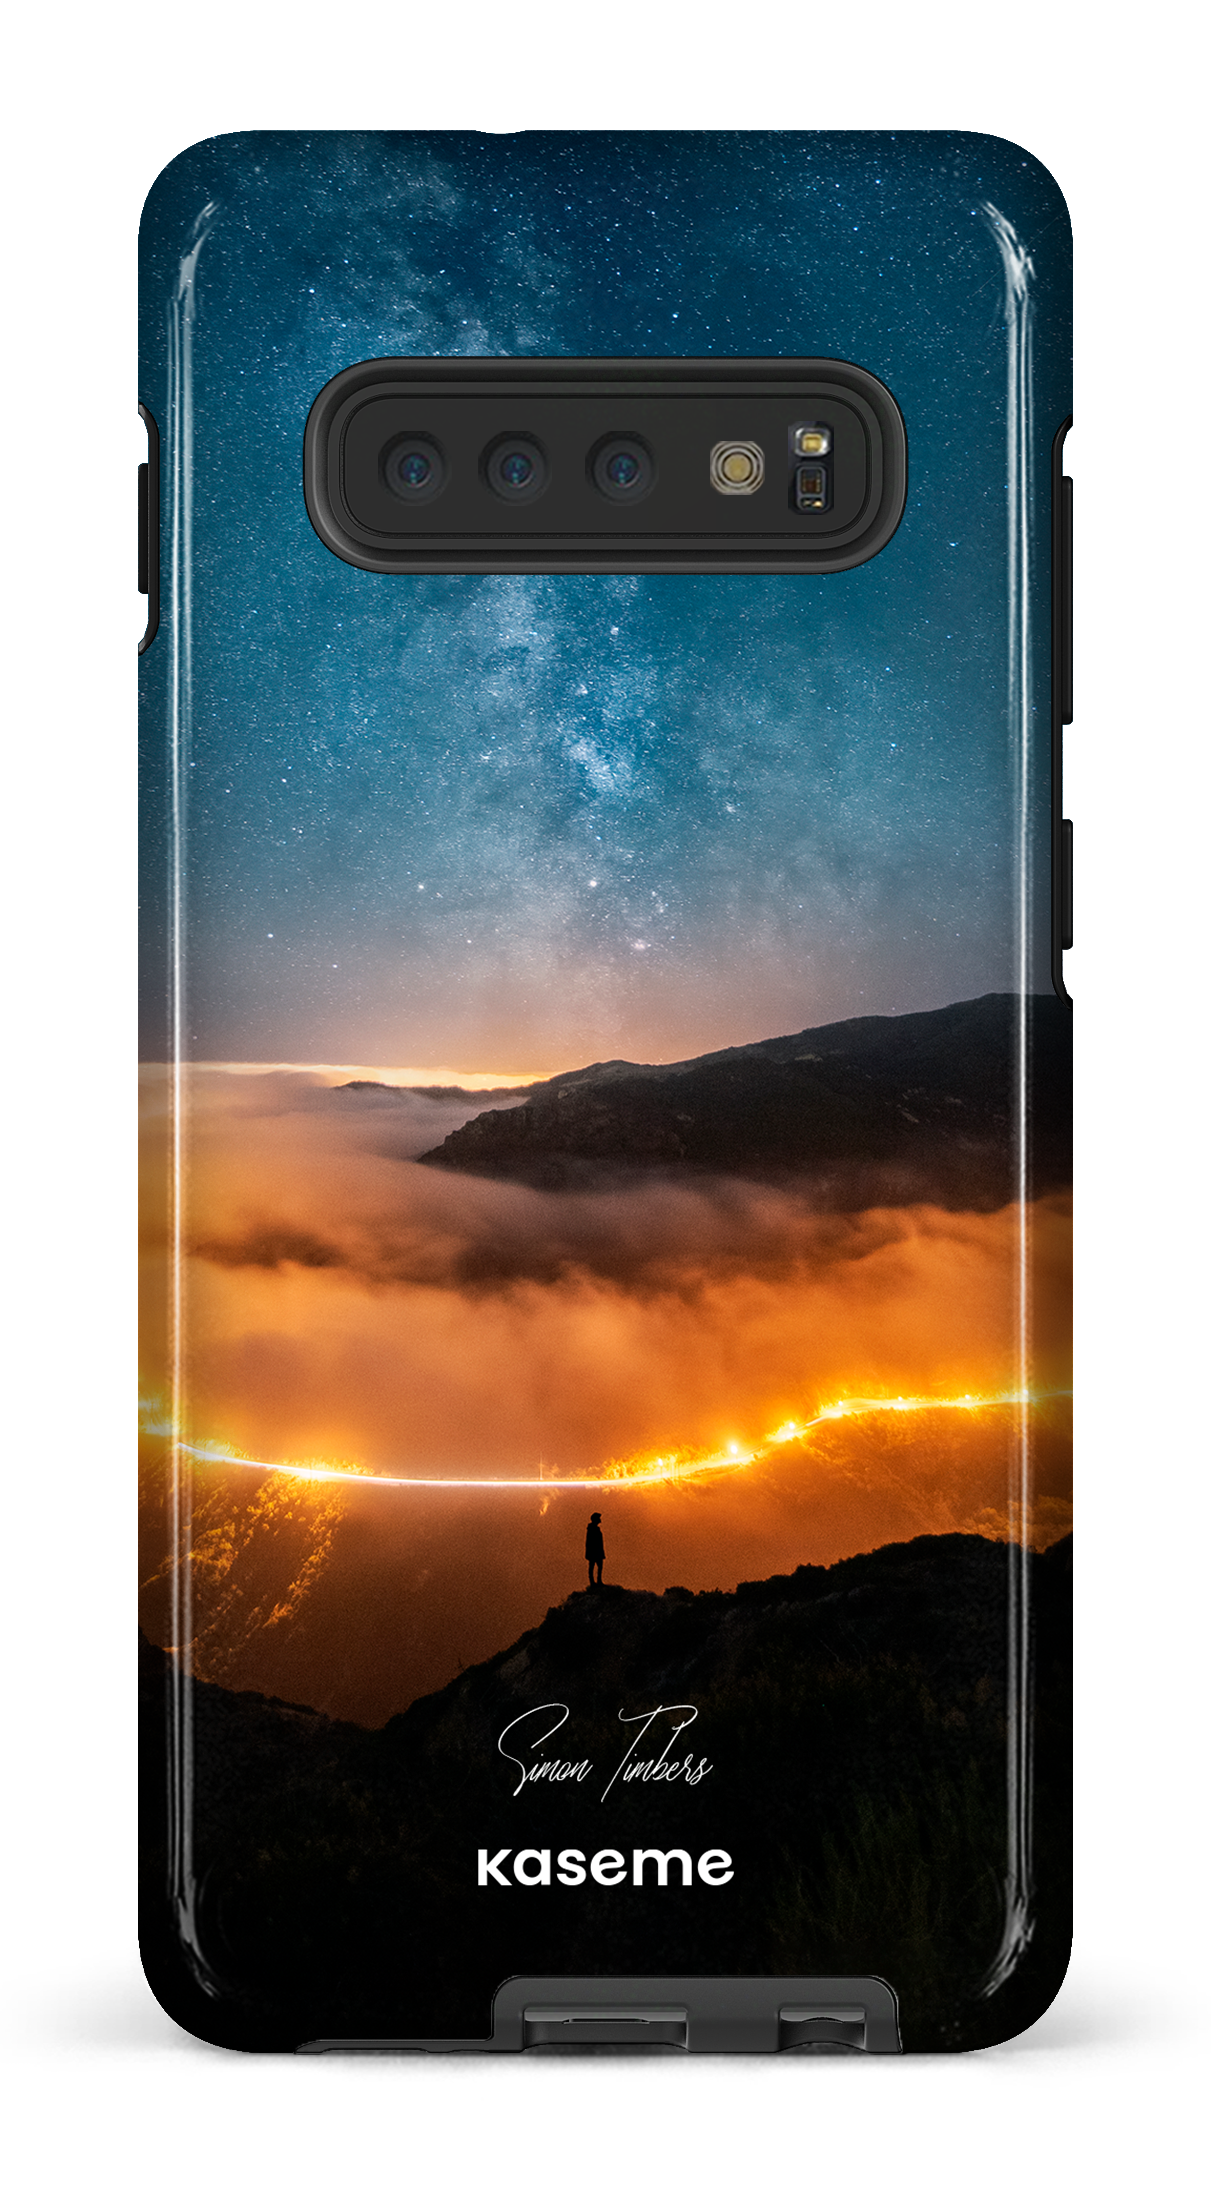 Malibu Milky Way by Simon Timbers - Galaxy S10 Plus